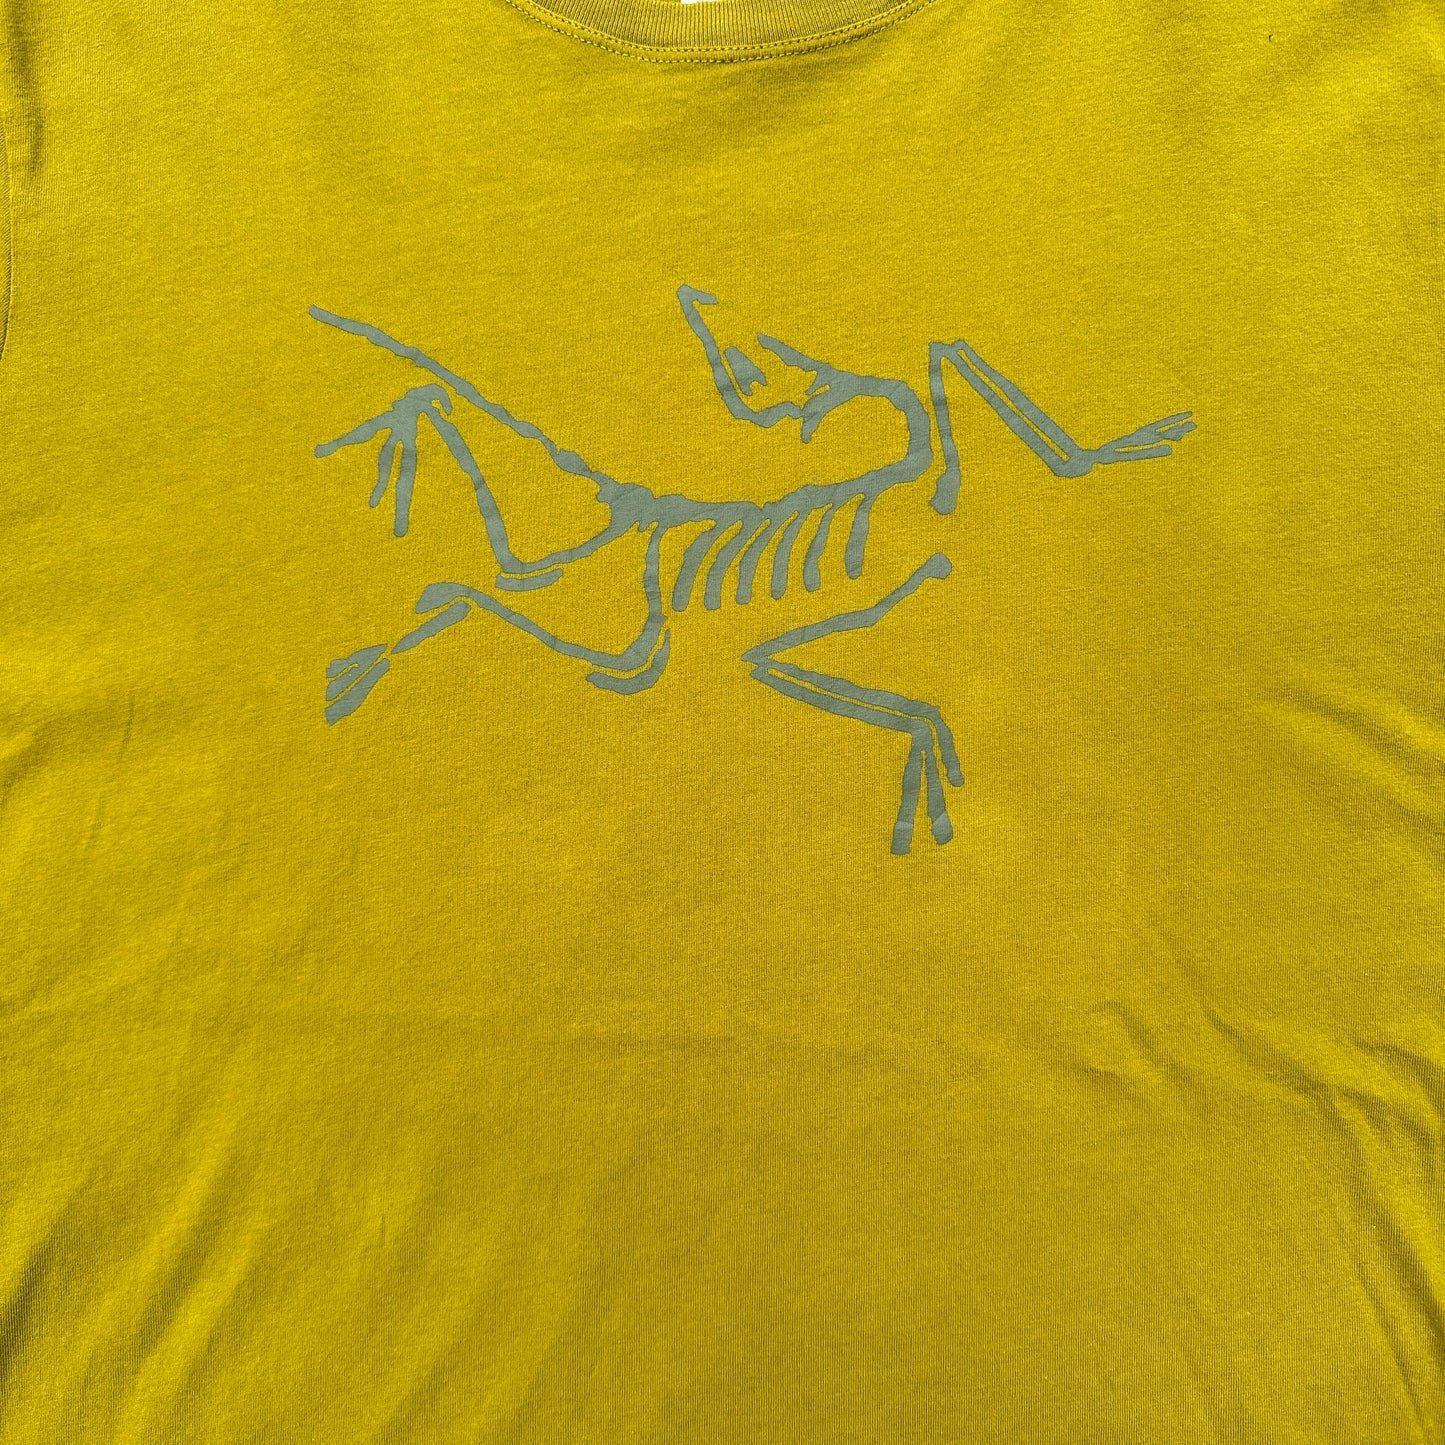 Arc'teryx Big Logo Yellow Mustard T-shirt